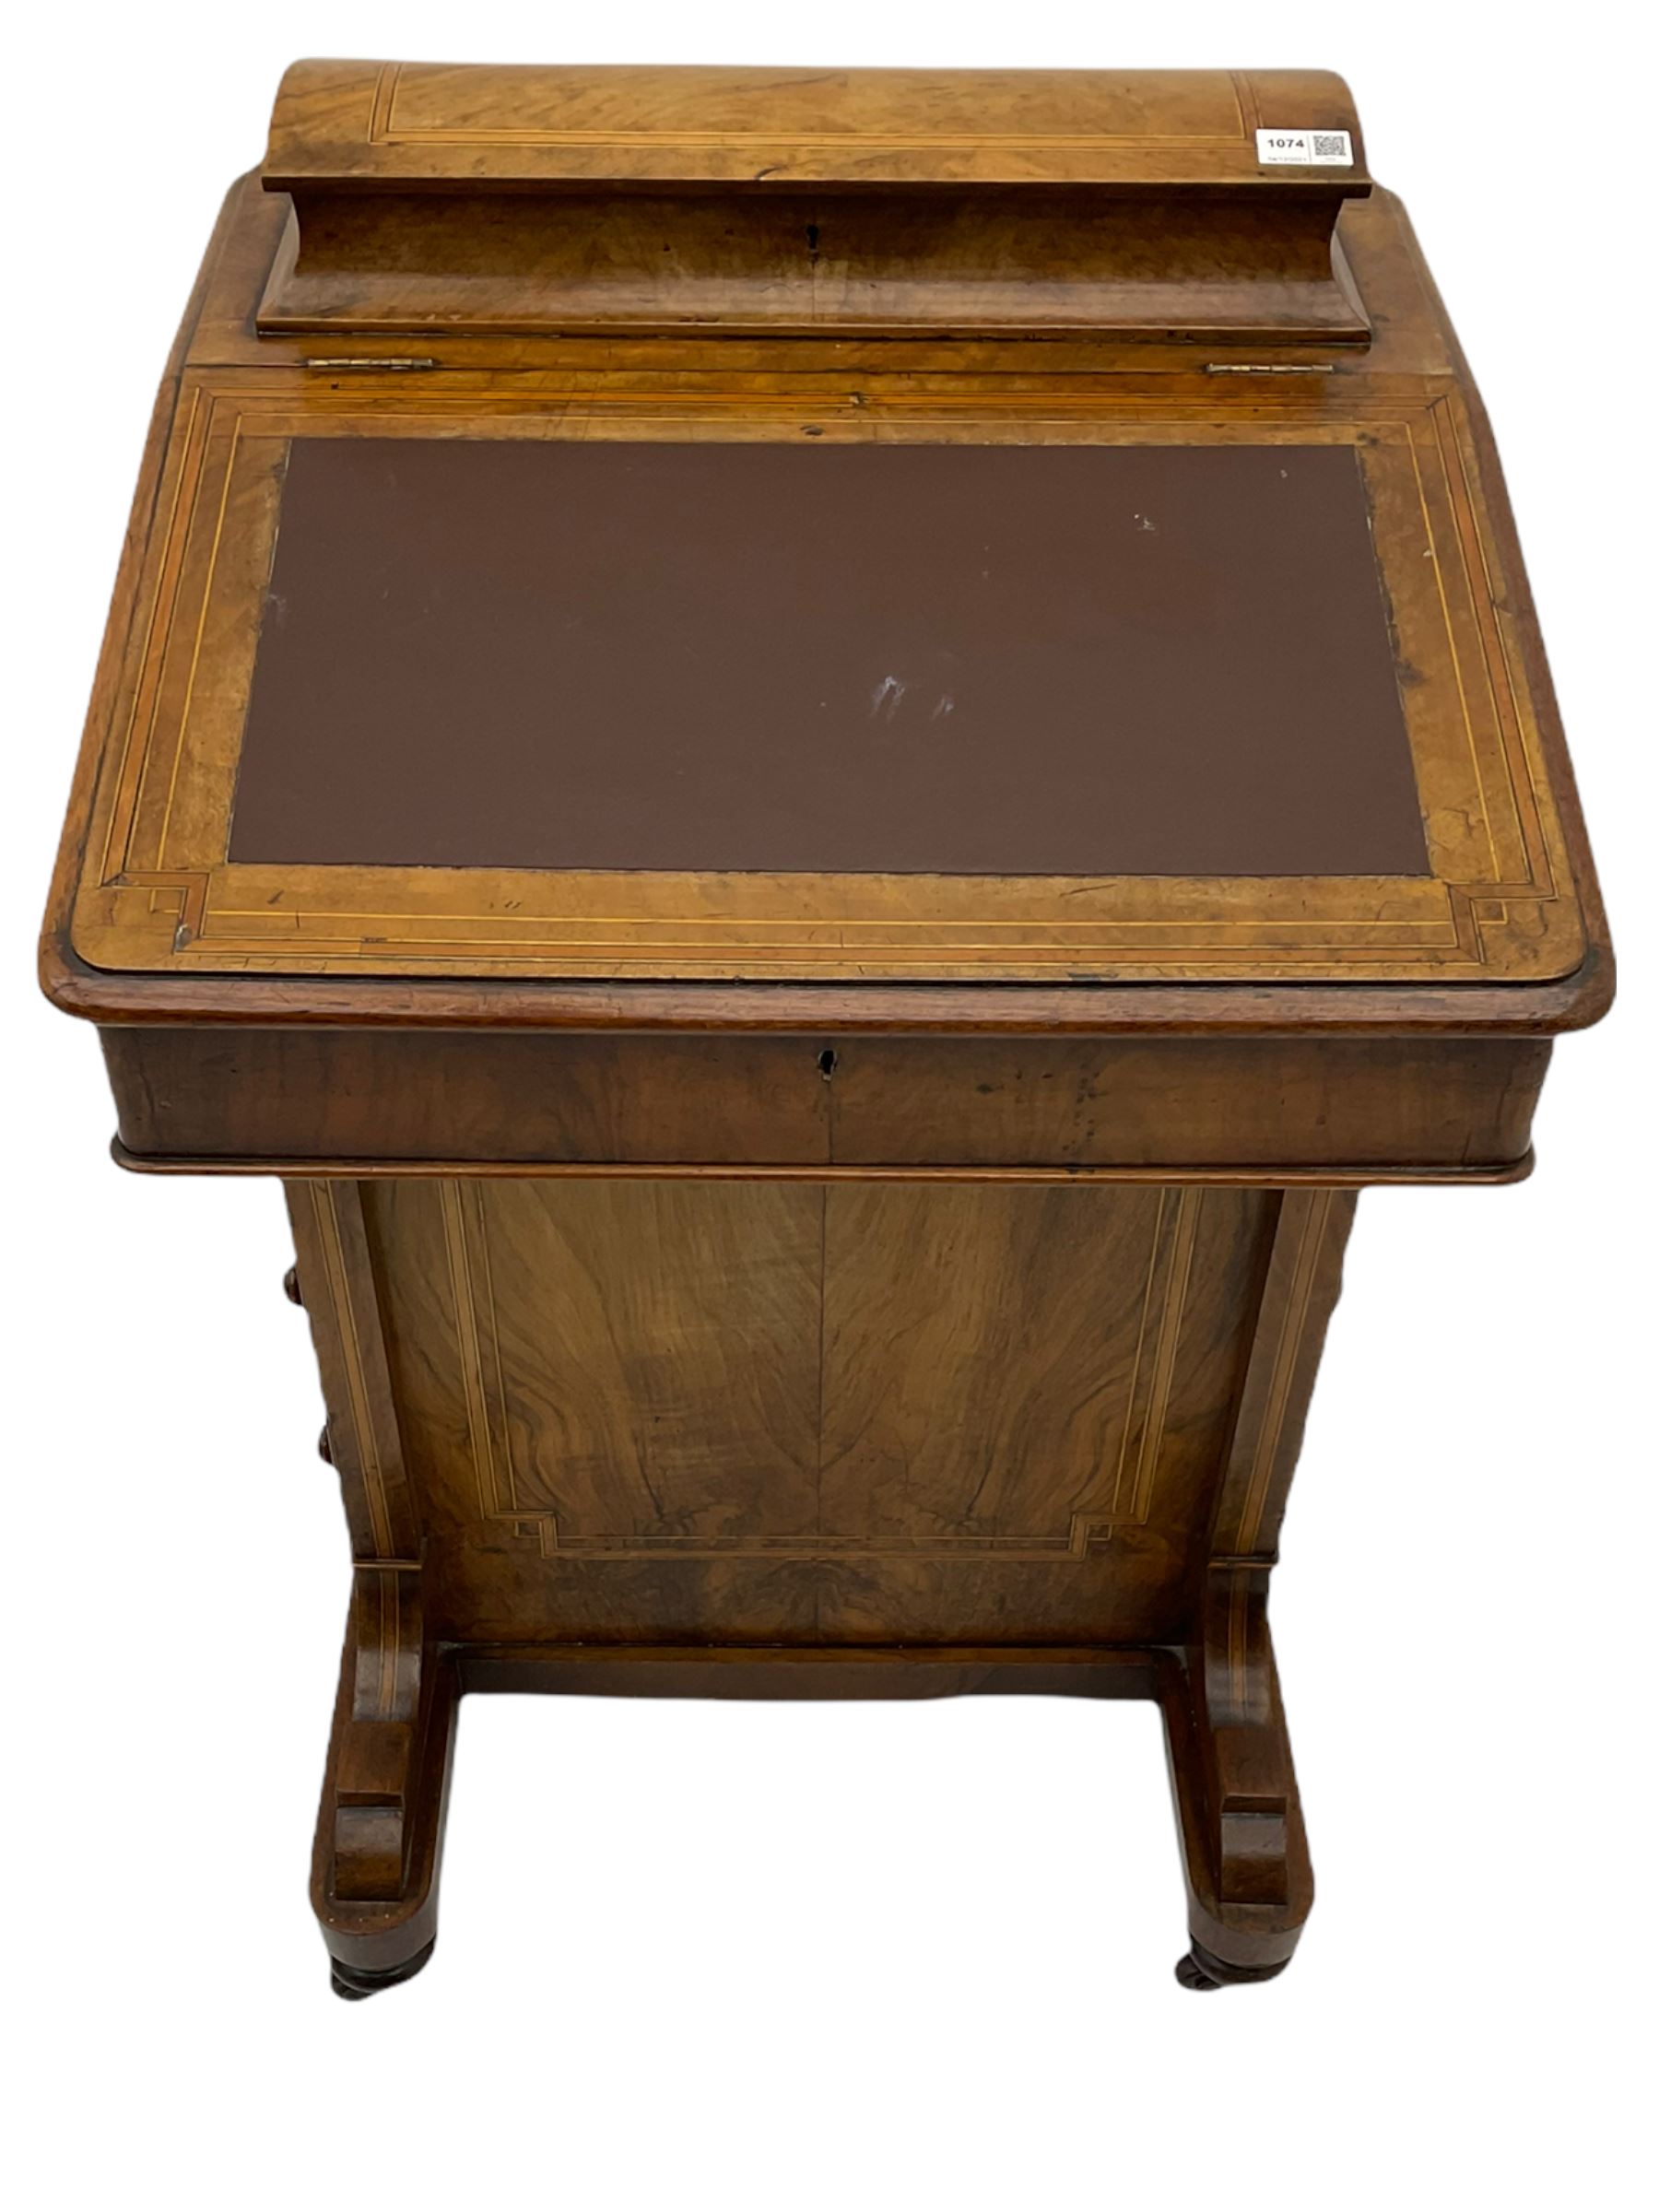 Victorian inlaid walnut Davenport desk - Image 3 of 7